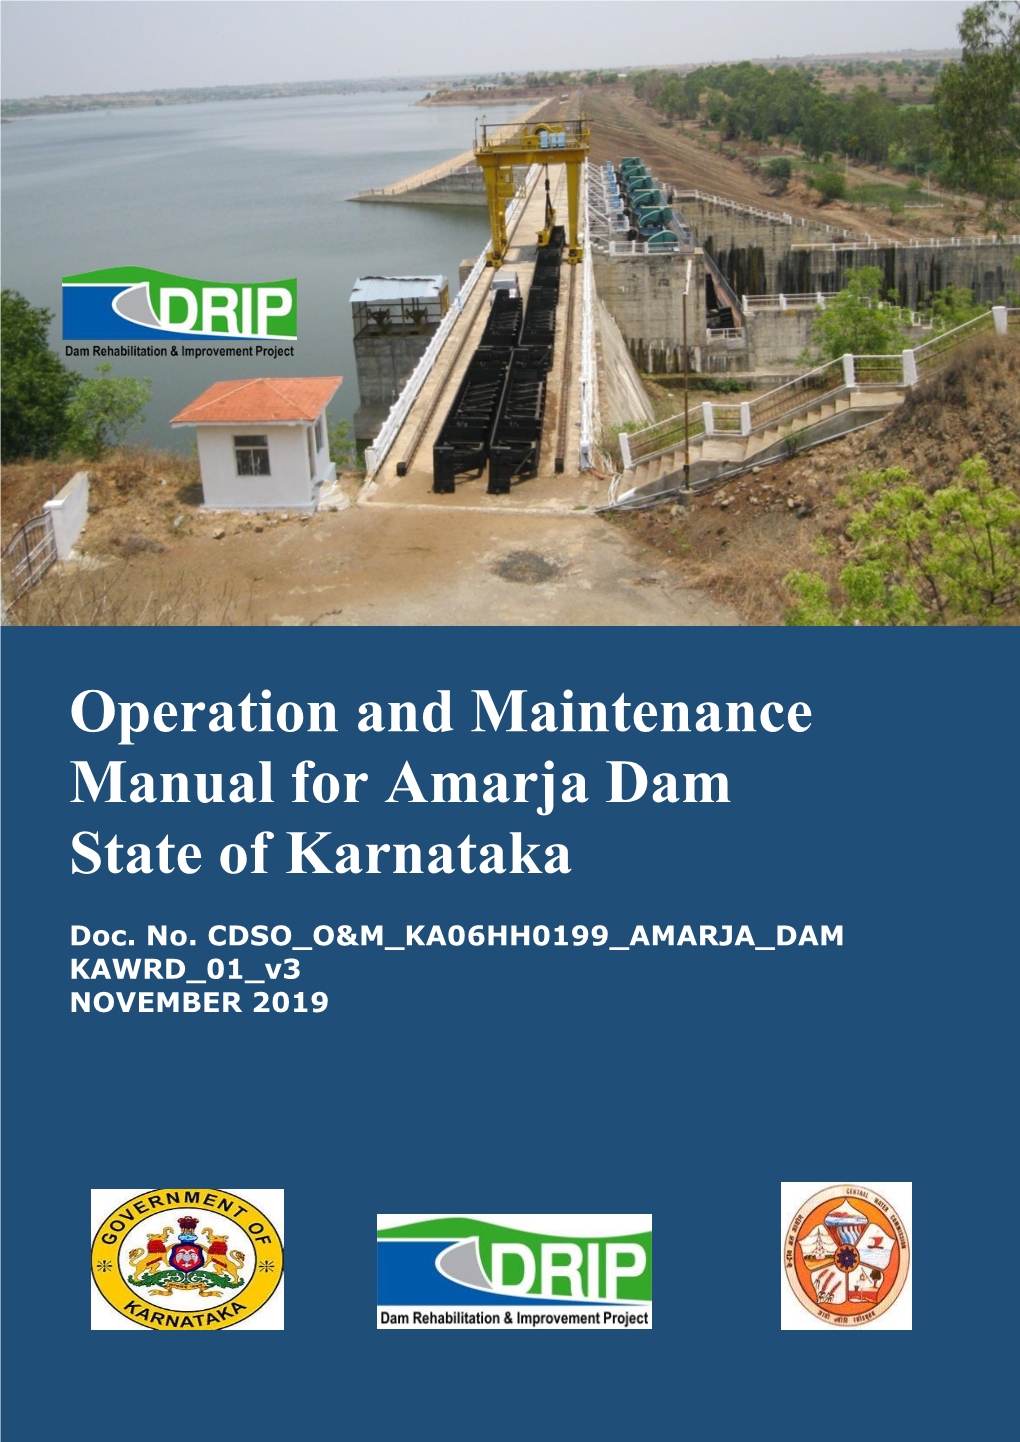 Amarja Dam State of Karnataka